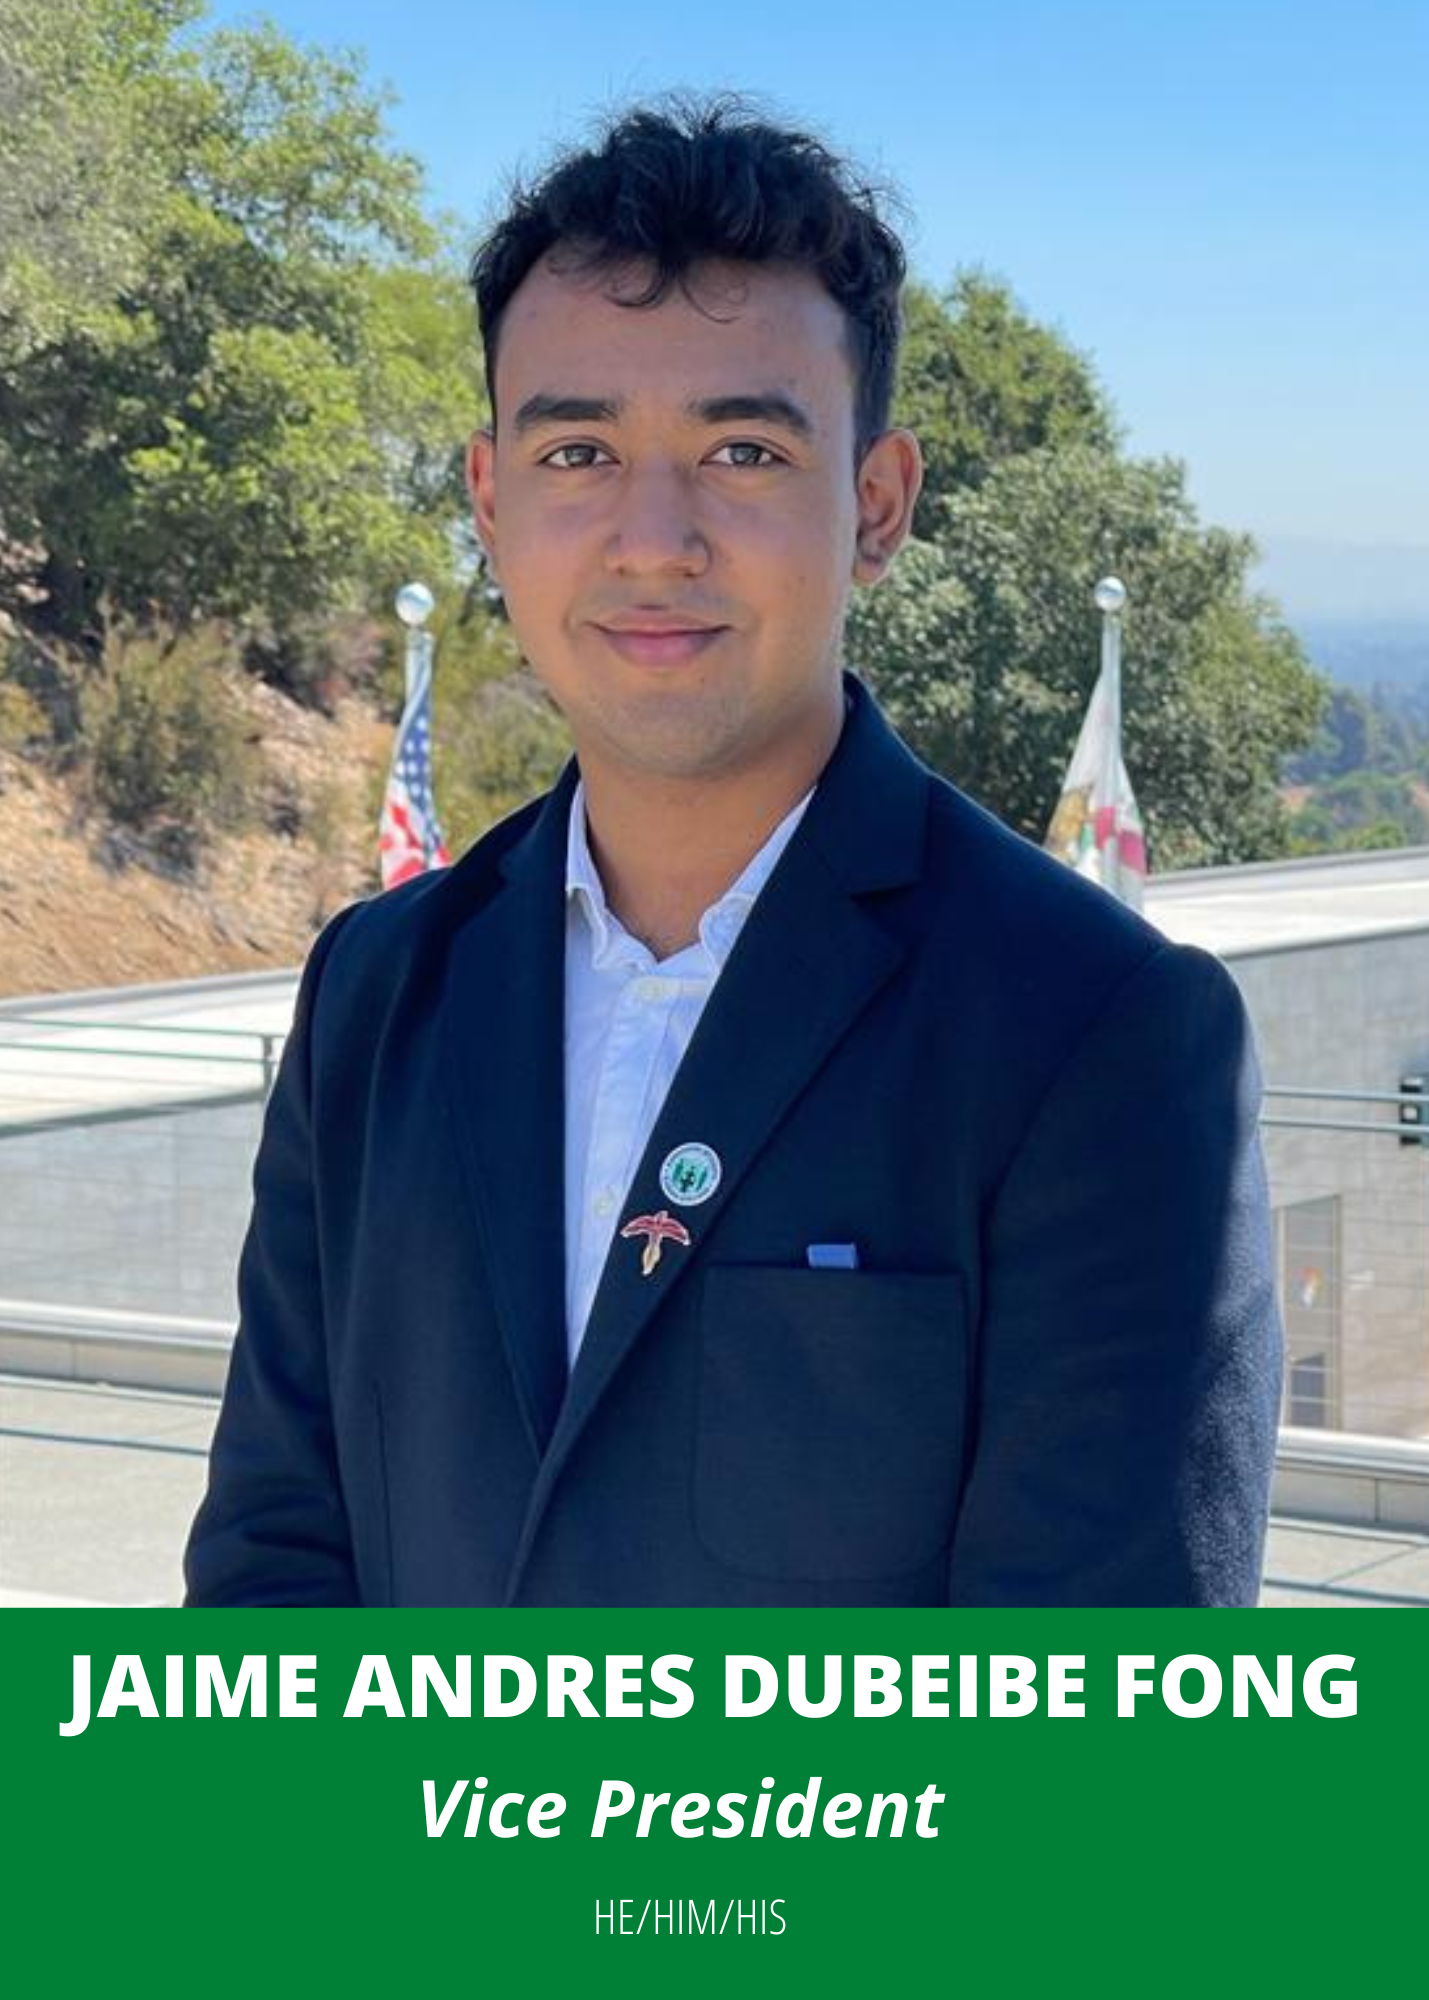 Jaime Andres Dubeibe Fong